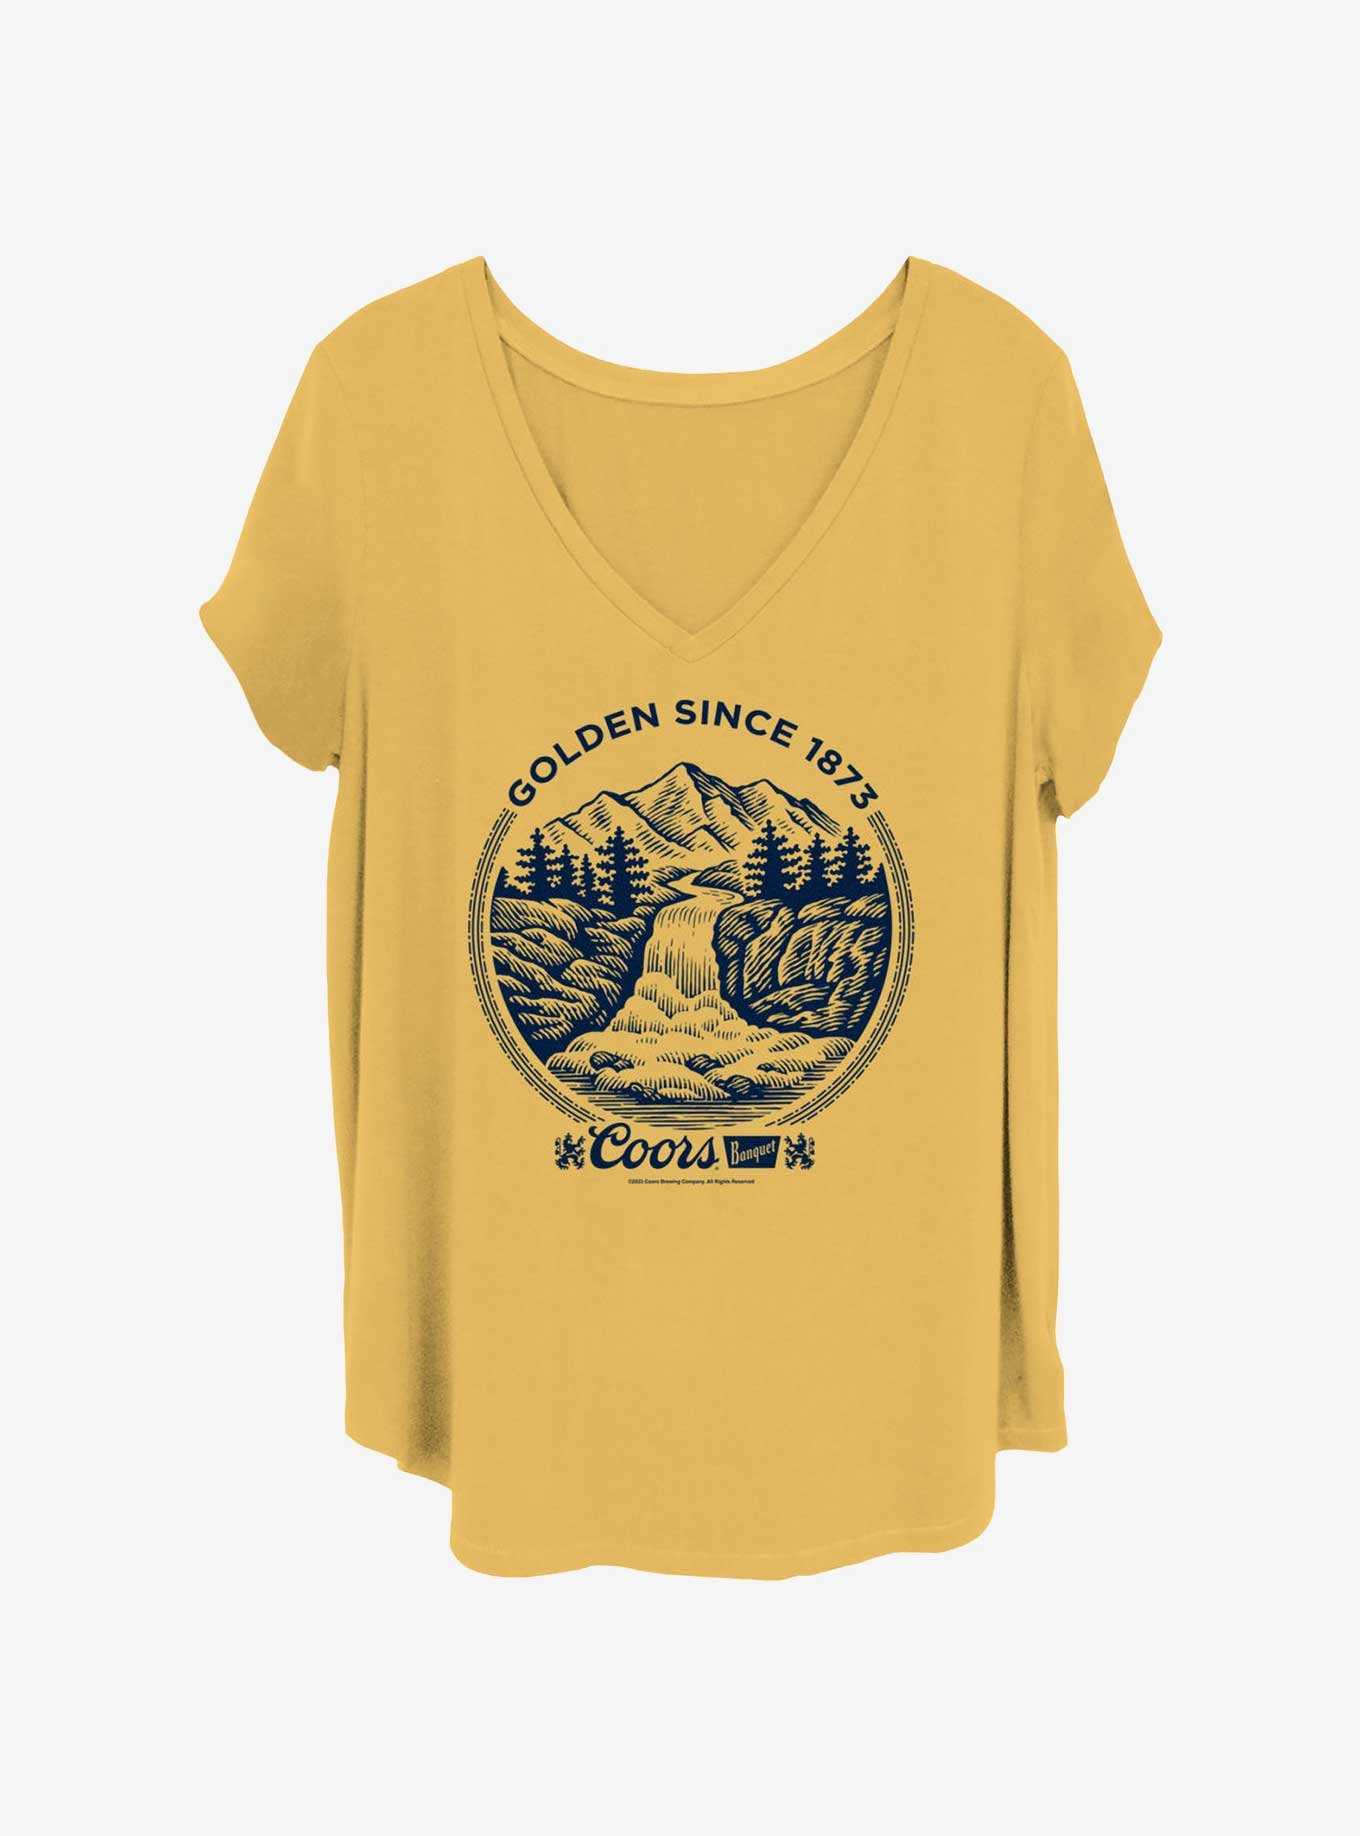 Coors Golden Since 1873 Girls T-Shirt Plus Size, , hi-res